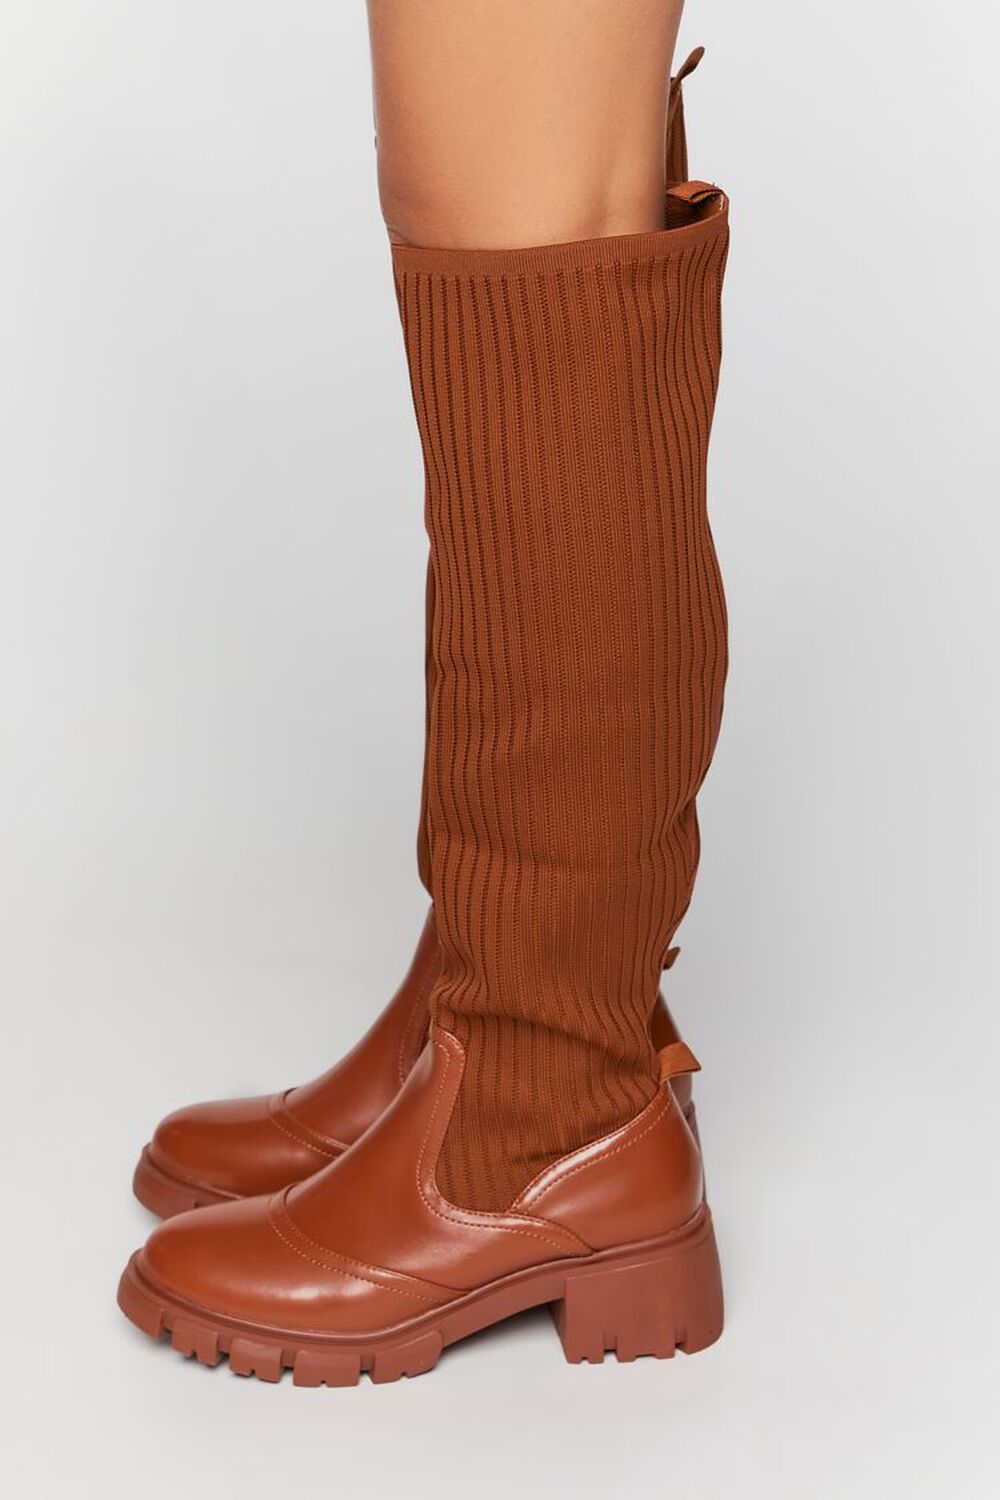 BROWN Ribbed Over-the-Knee Lug Boots, image 2